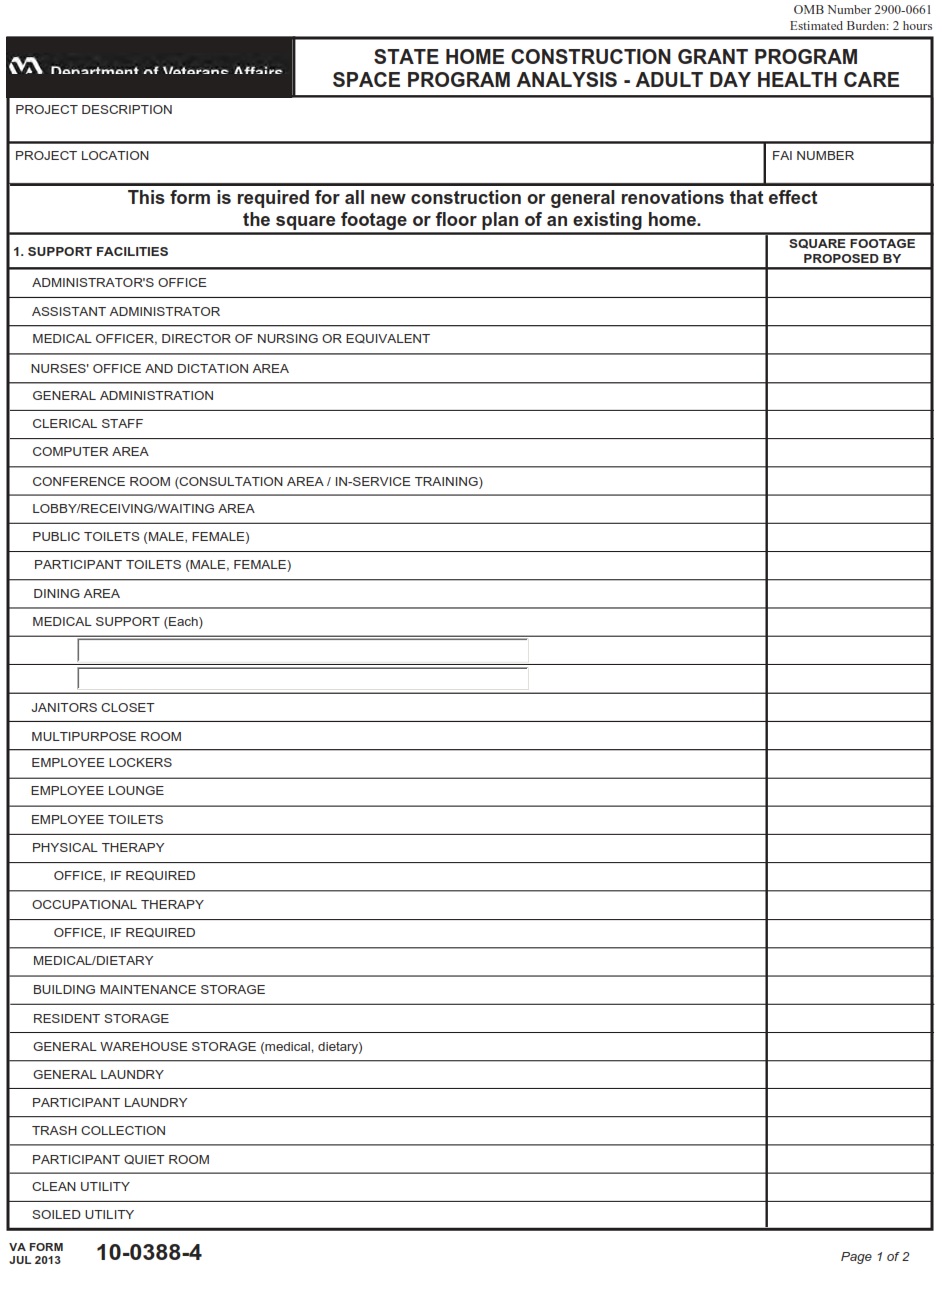 VA Form 10-0388-4 - Page 1